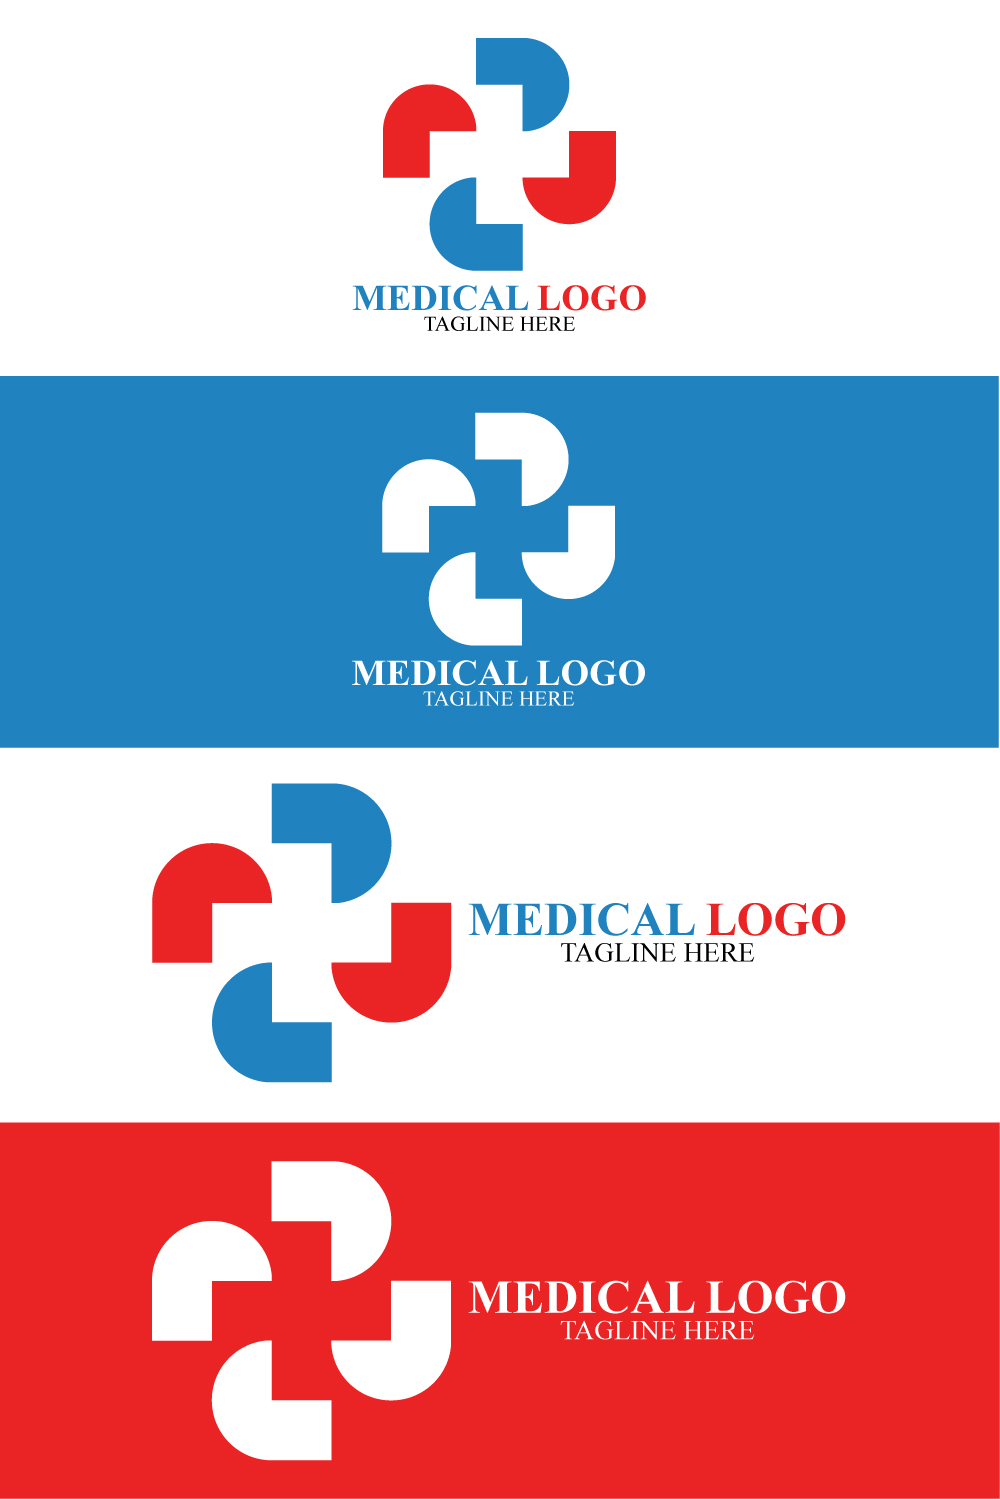 Professional Medical Logo Design Service pinterest preview image.